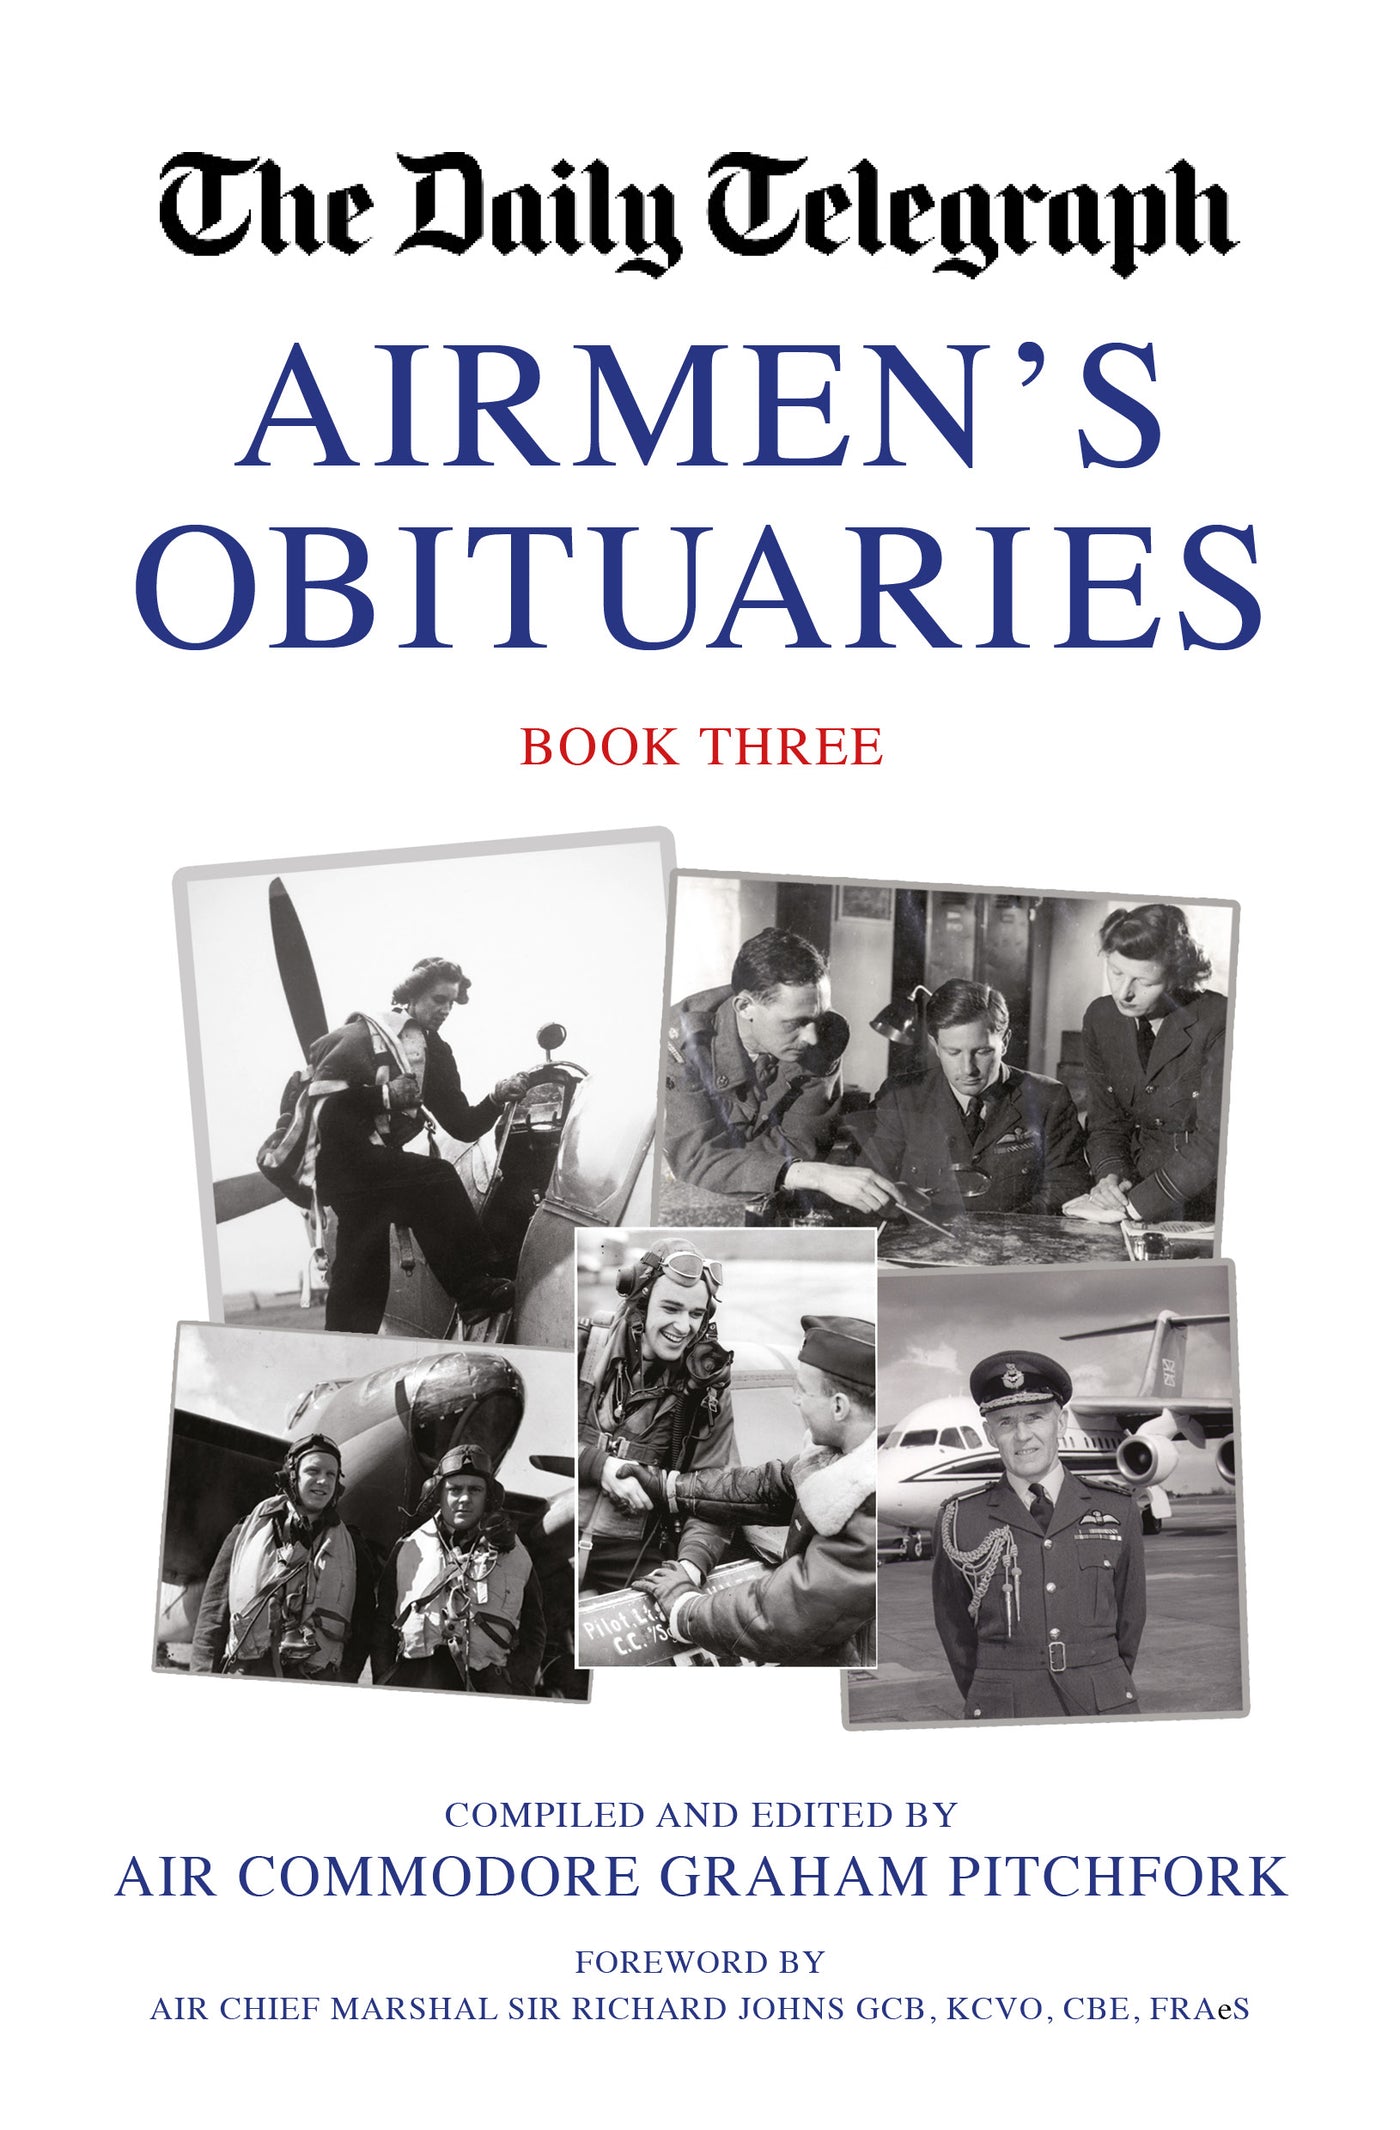 Airmen's Obituaries Book Three